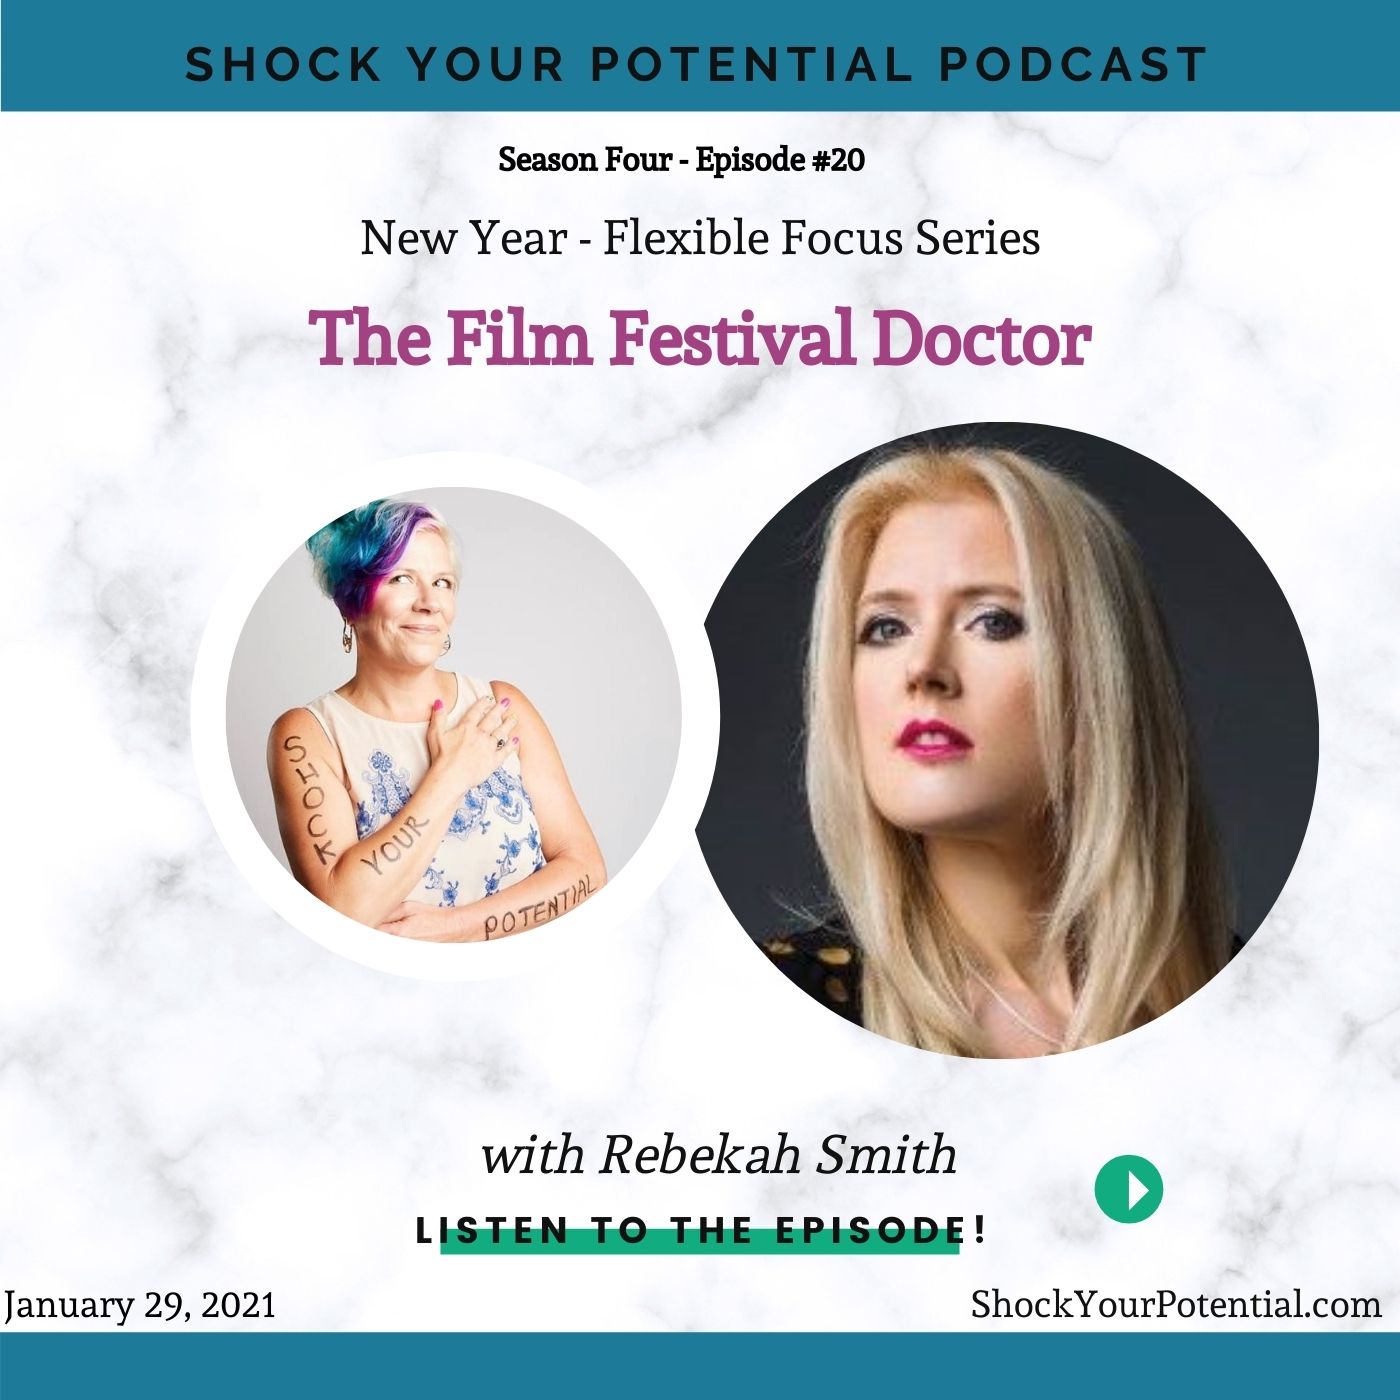 The Film Festival Doctor – Rebekah Smith